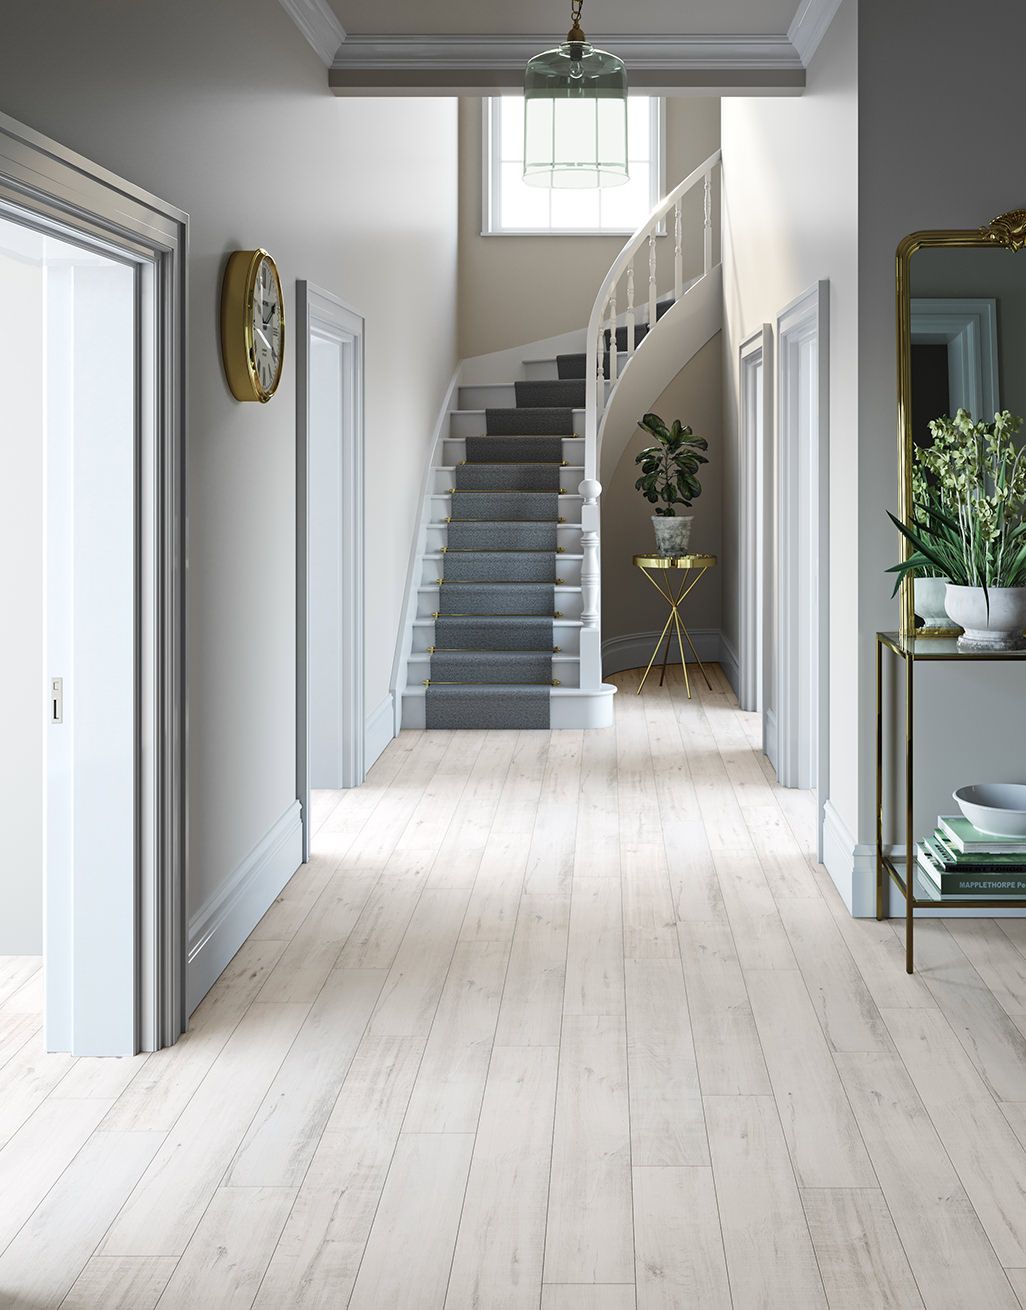 Gala Oak White Laminate Flooring, Pictures Of Laminate Flooring In Hallway